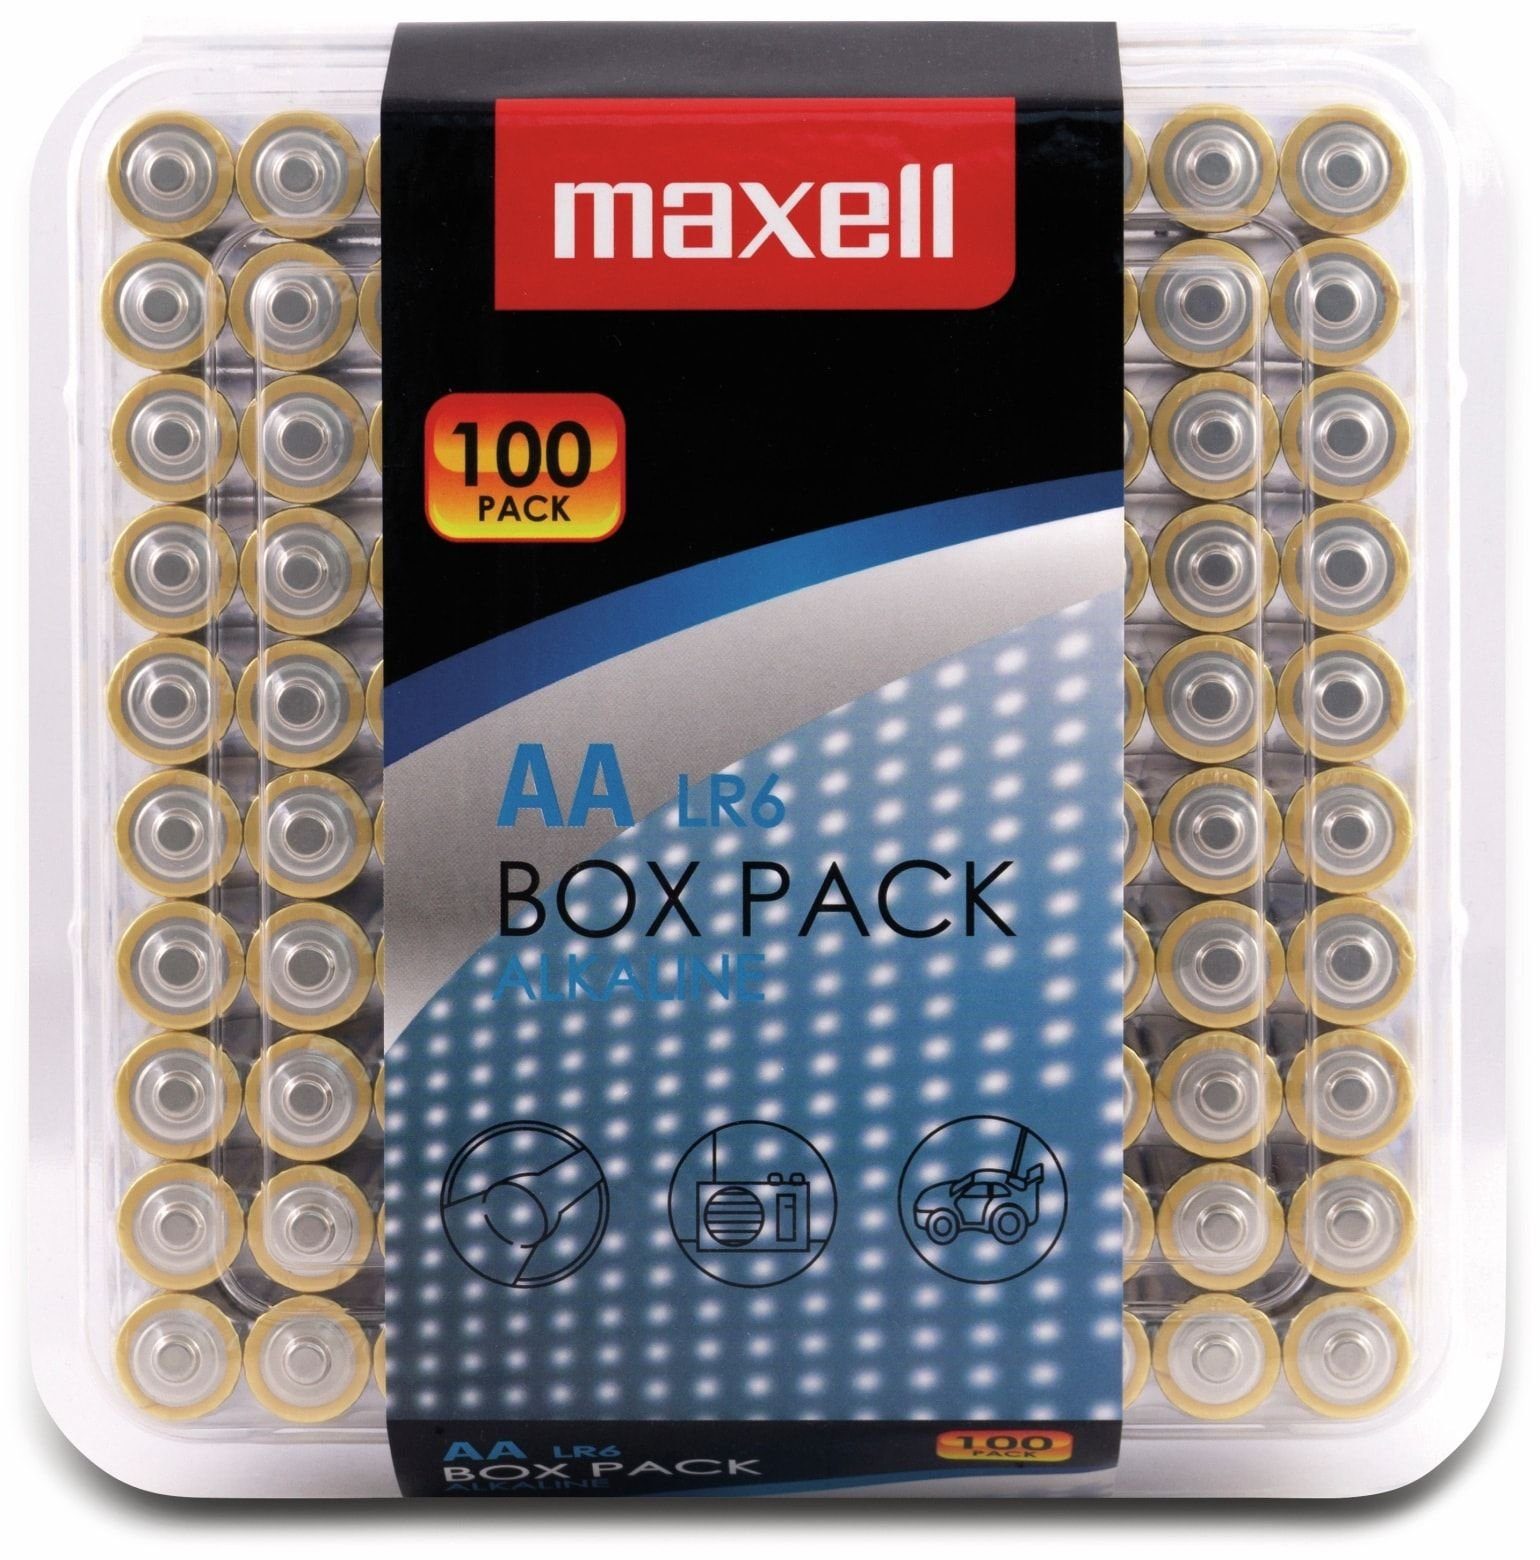 Maxell MAXELL Mignon-Batterie Alkaline, AA, LR6, 100er Batterie